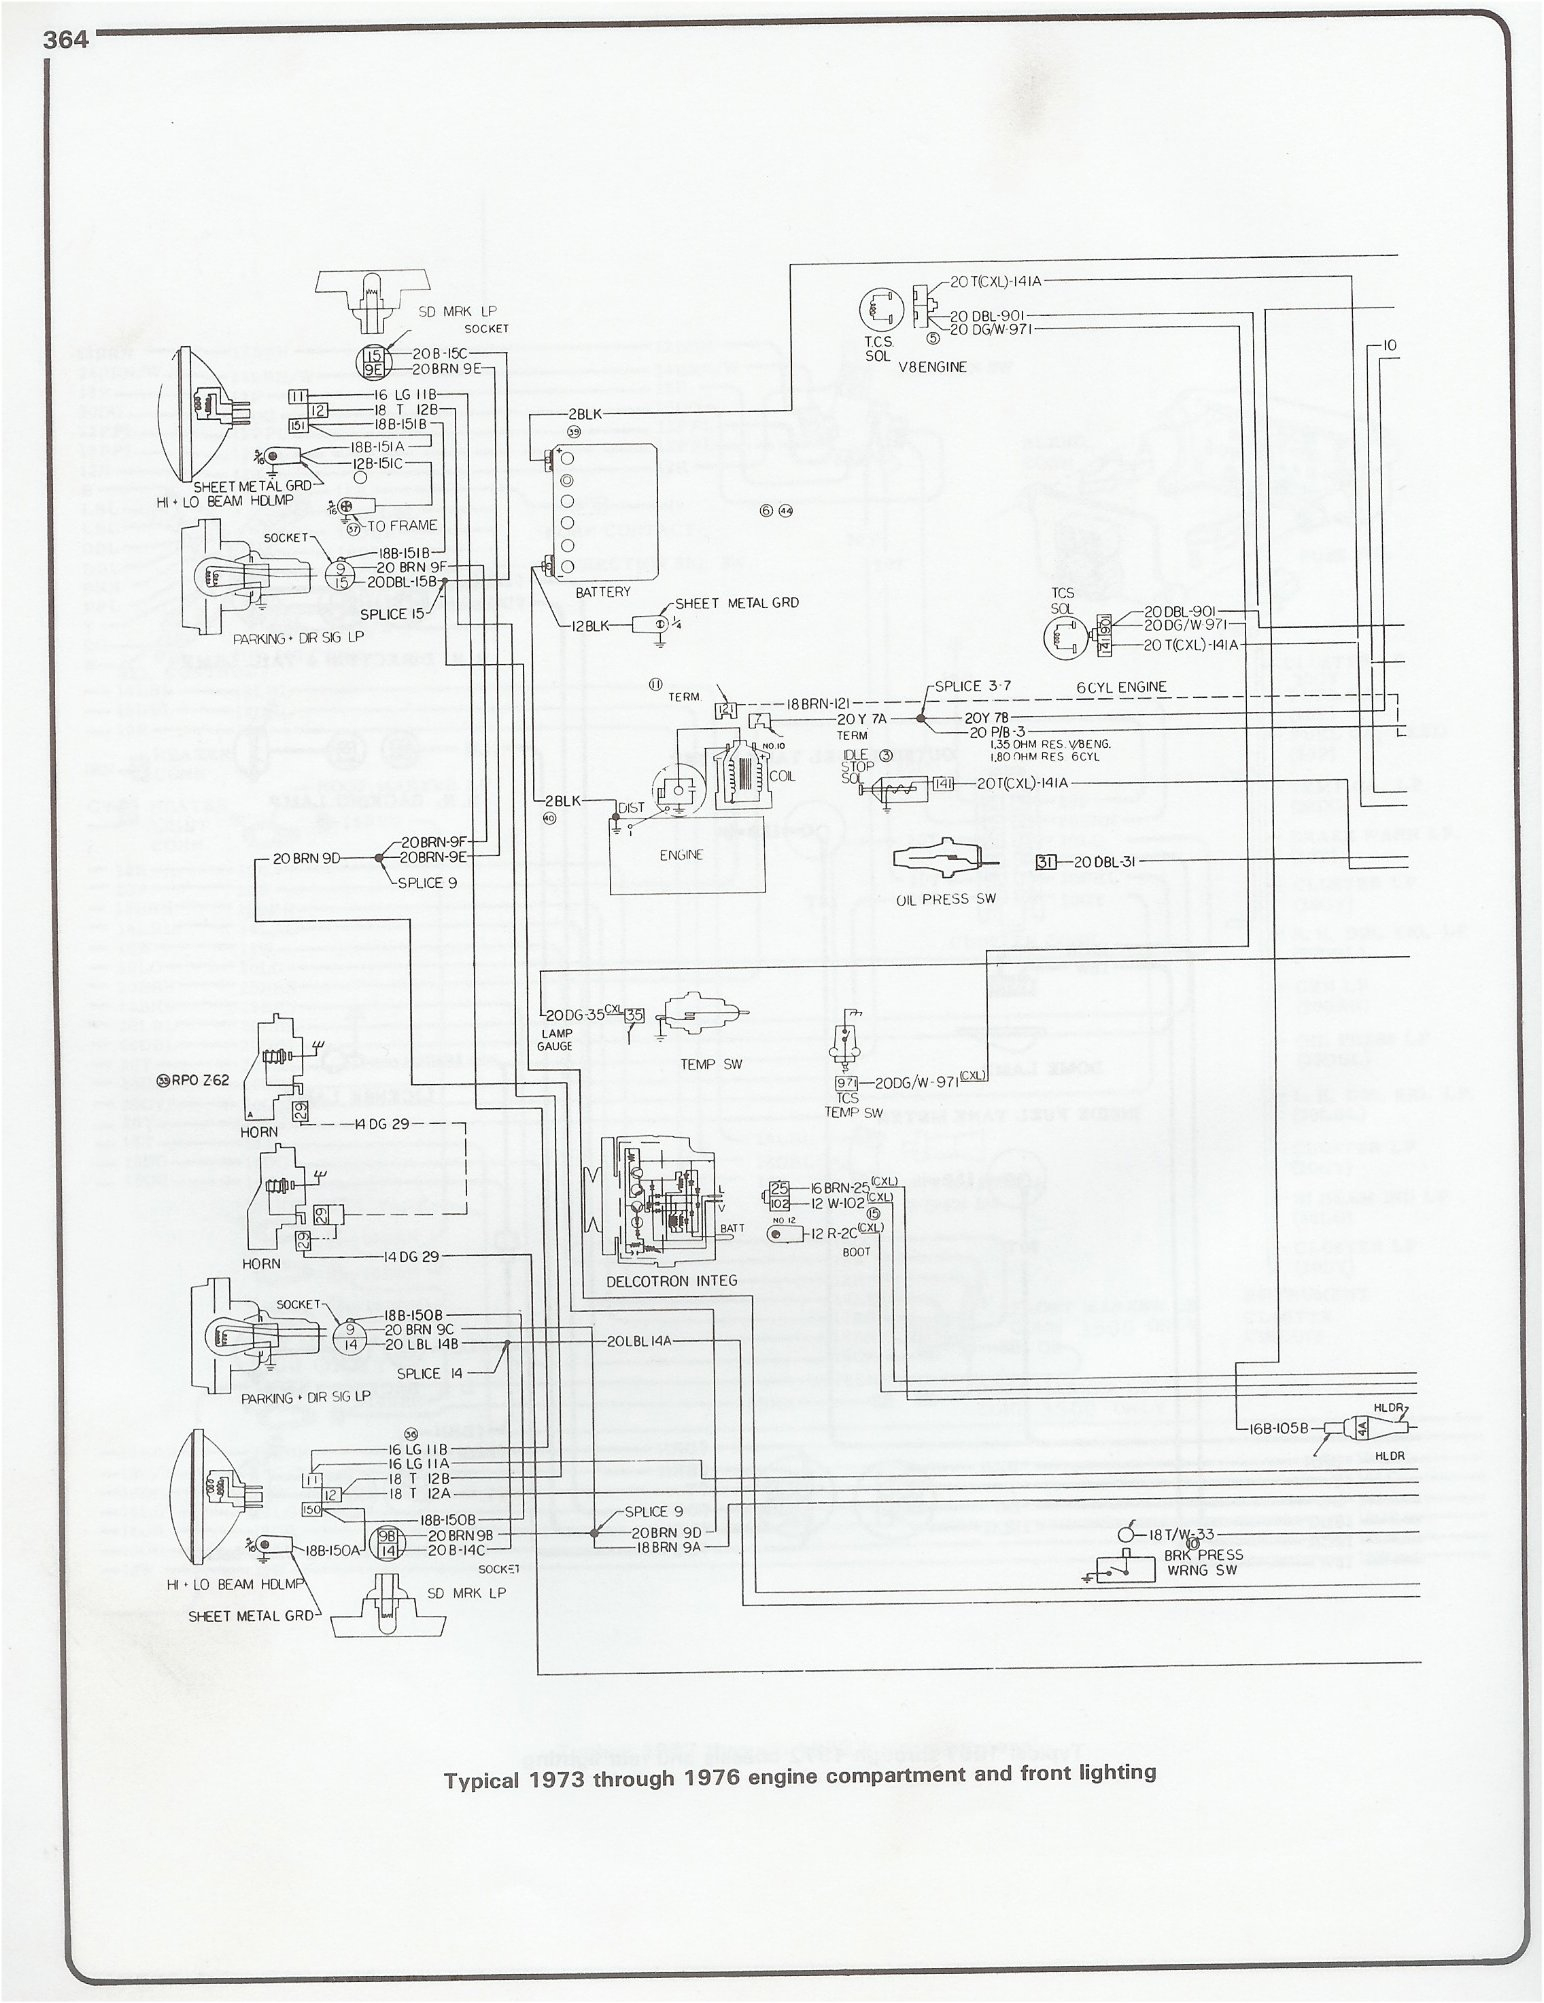 1 8T Fuse Diagram | Wiring Library - 2004 Silverado Bose Amp Wiring Diagram